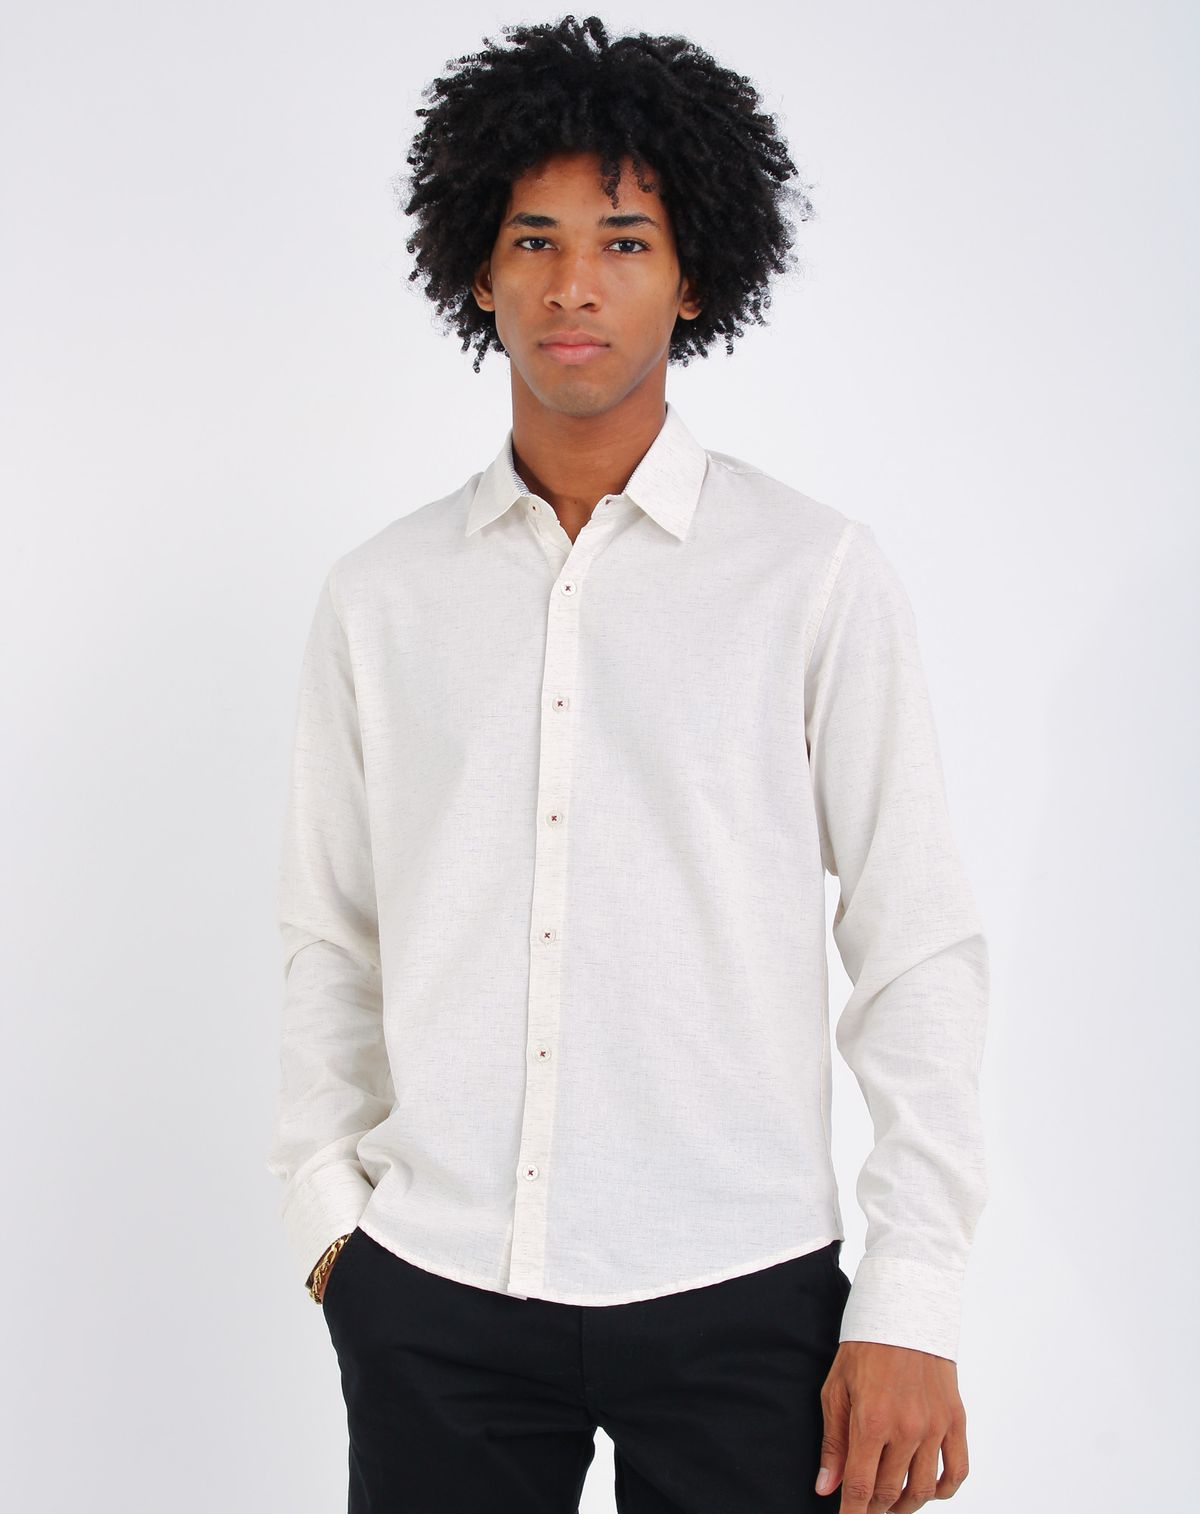 696775001-camisa-manga-longa-masculina-linho-off-white-p-ecd